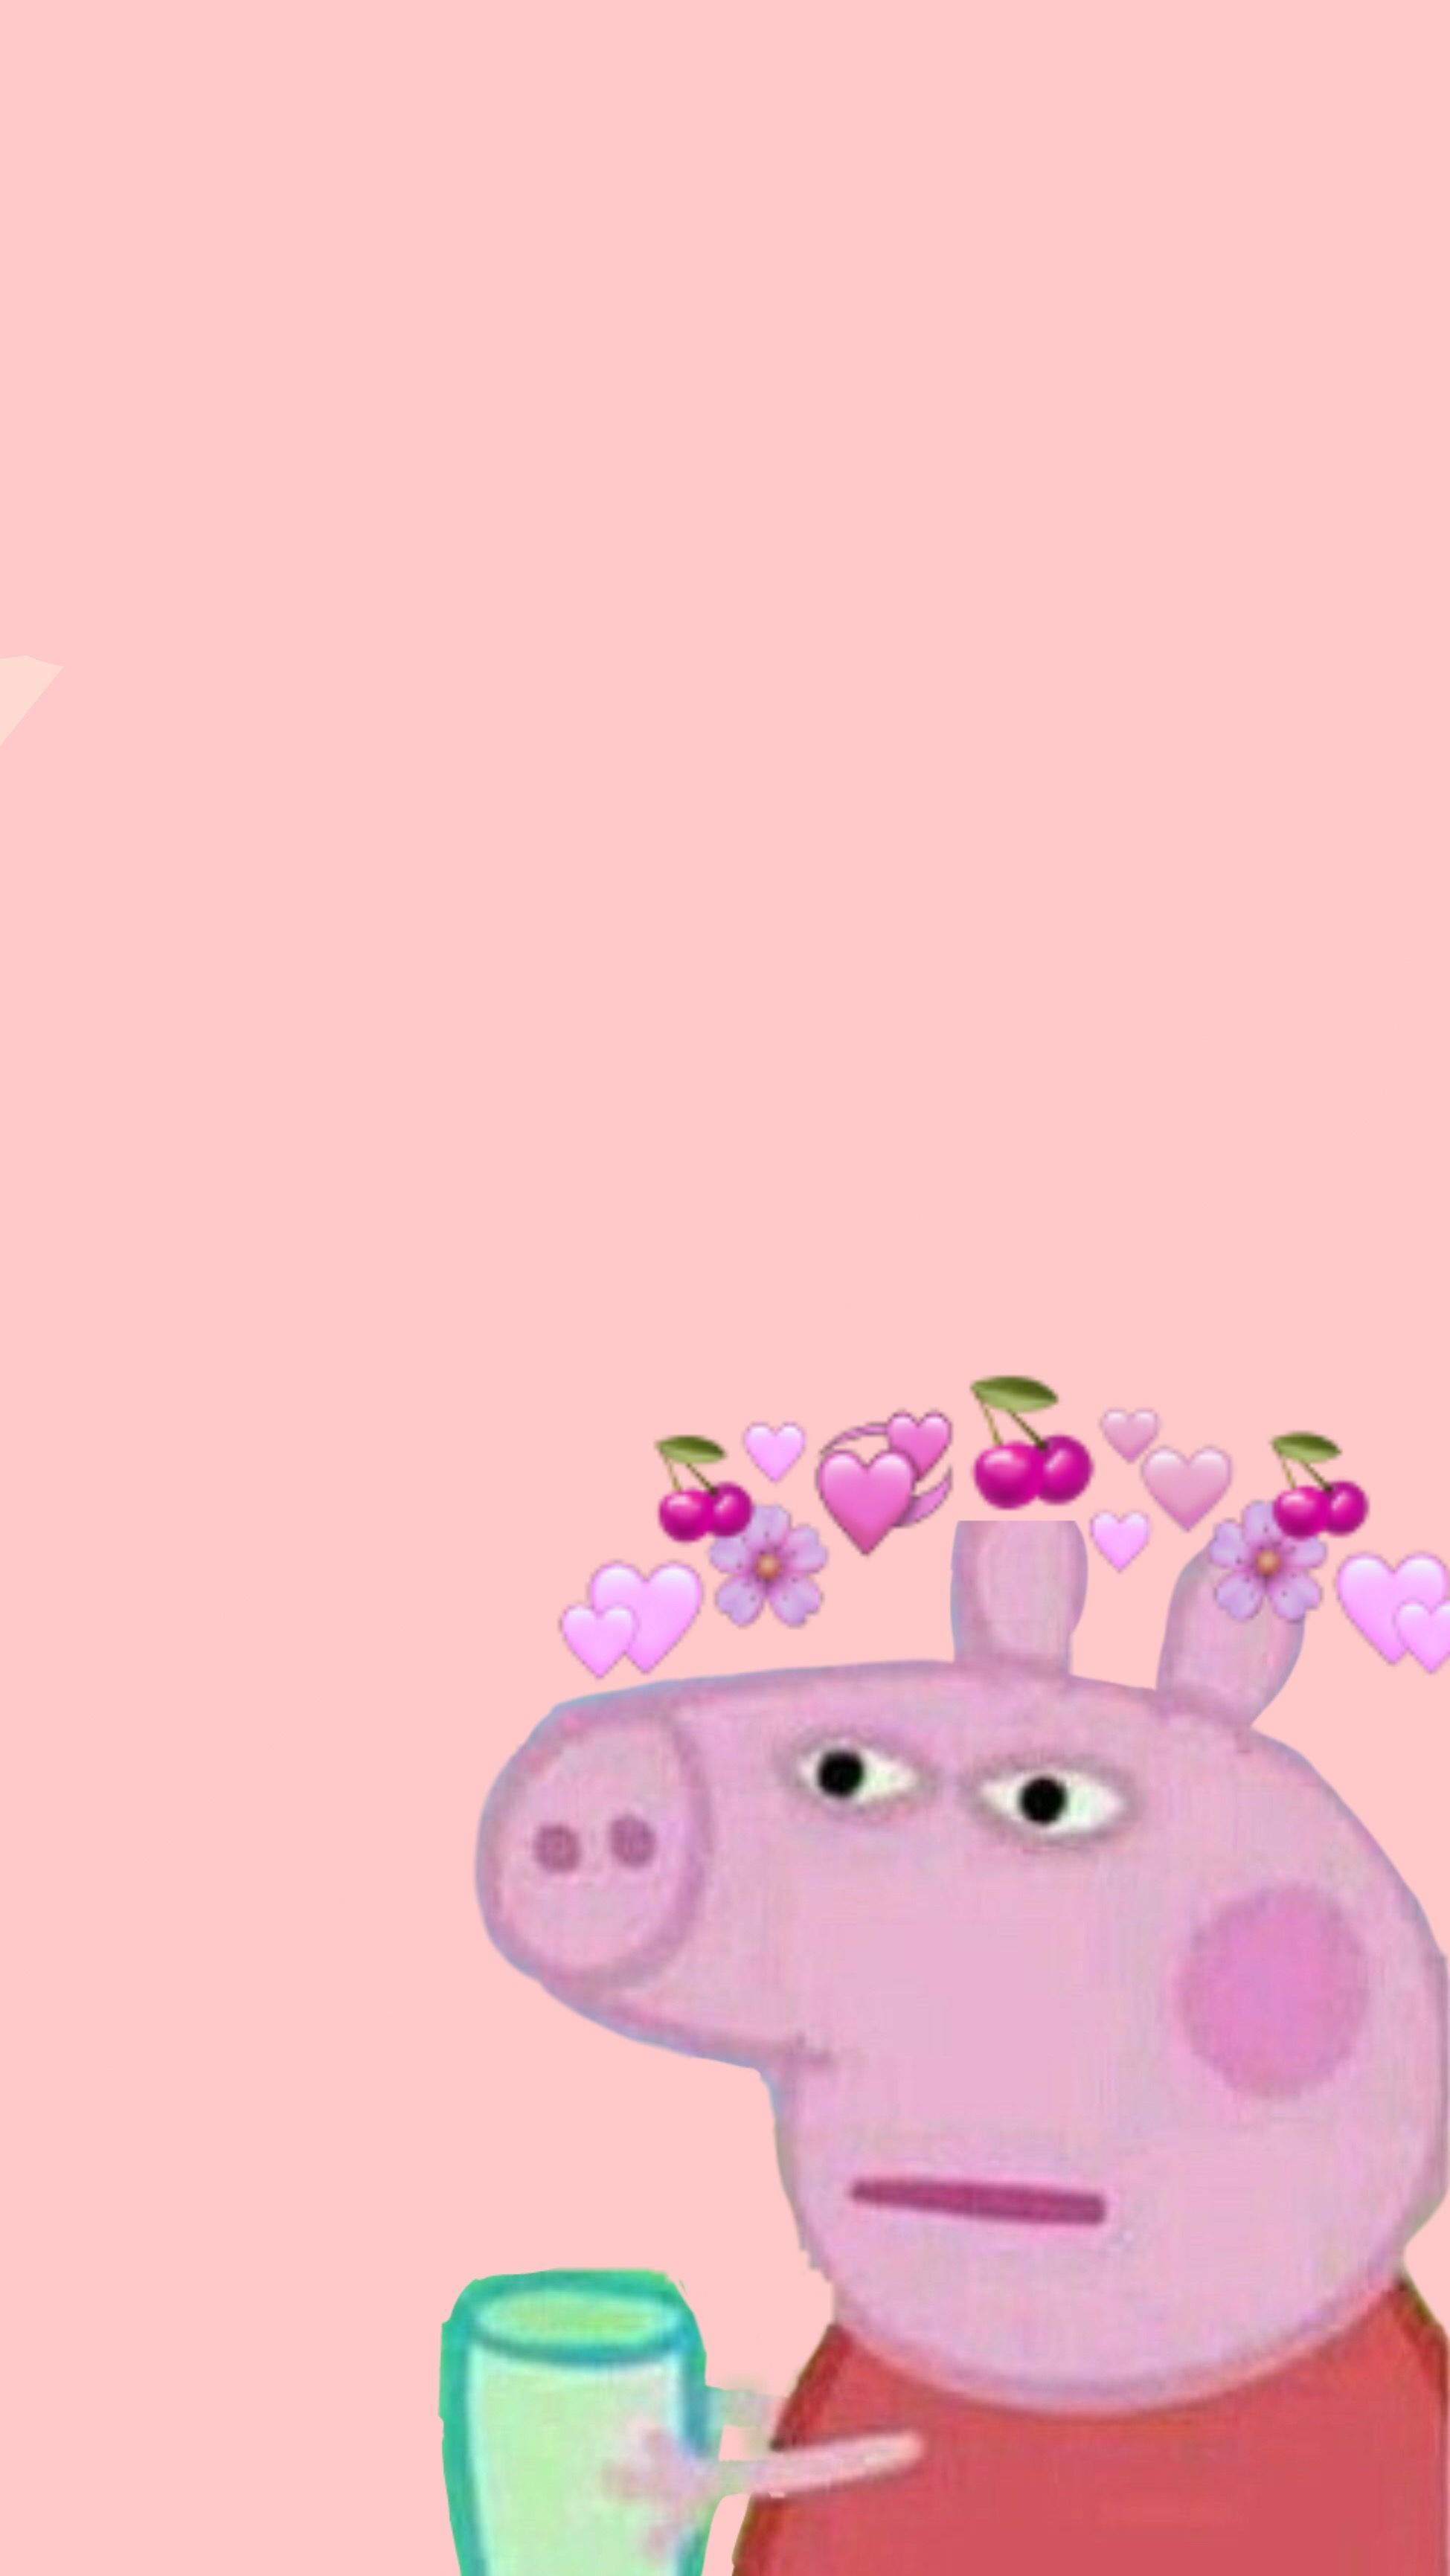 Aesthetic Peppa Pig Wallpaper